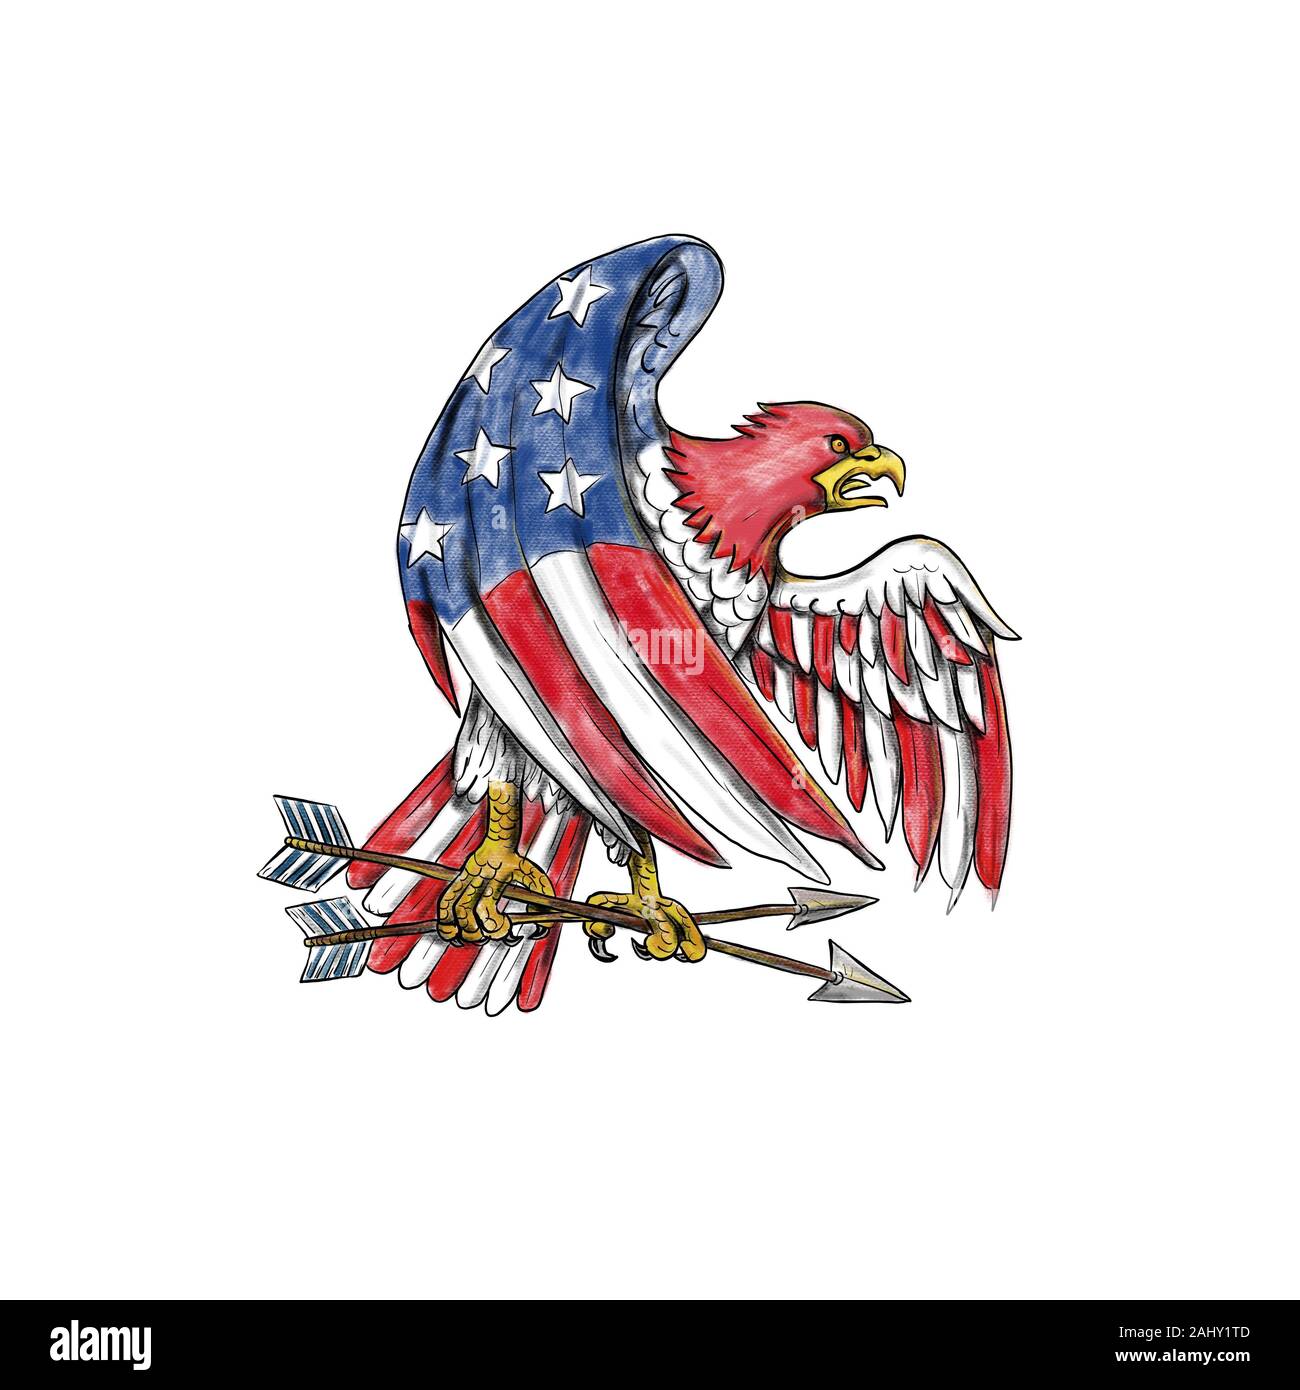 14 Patriotic American Flag Tattoo Ideas for Women  Moms Got the Stuff